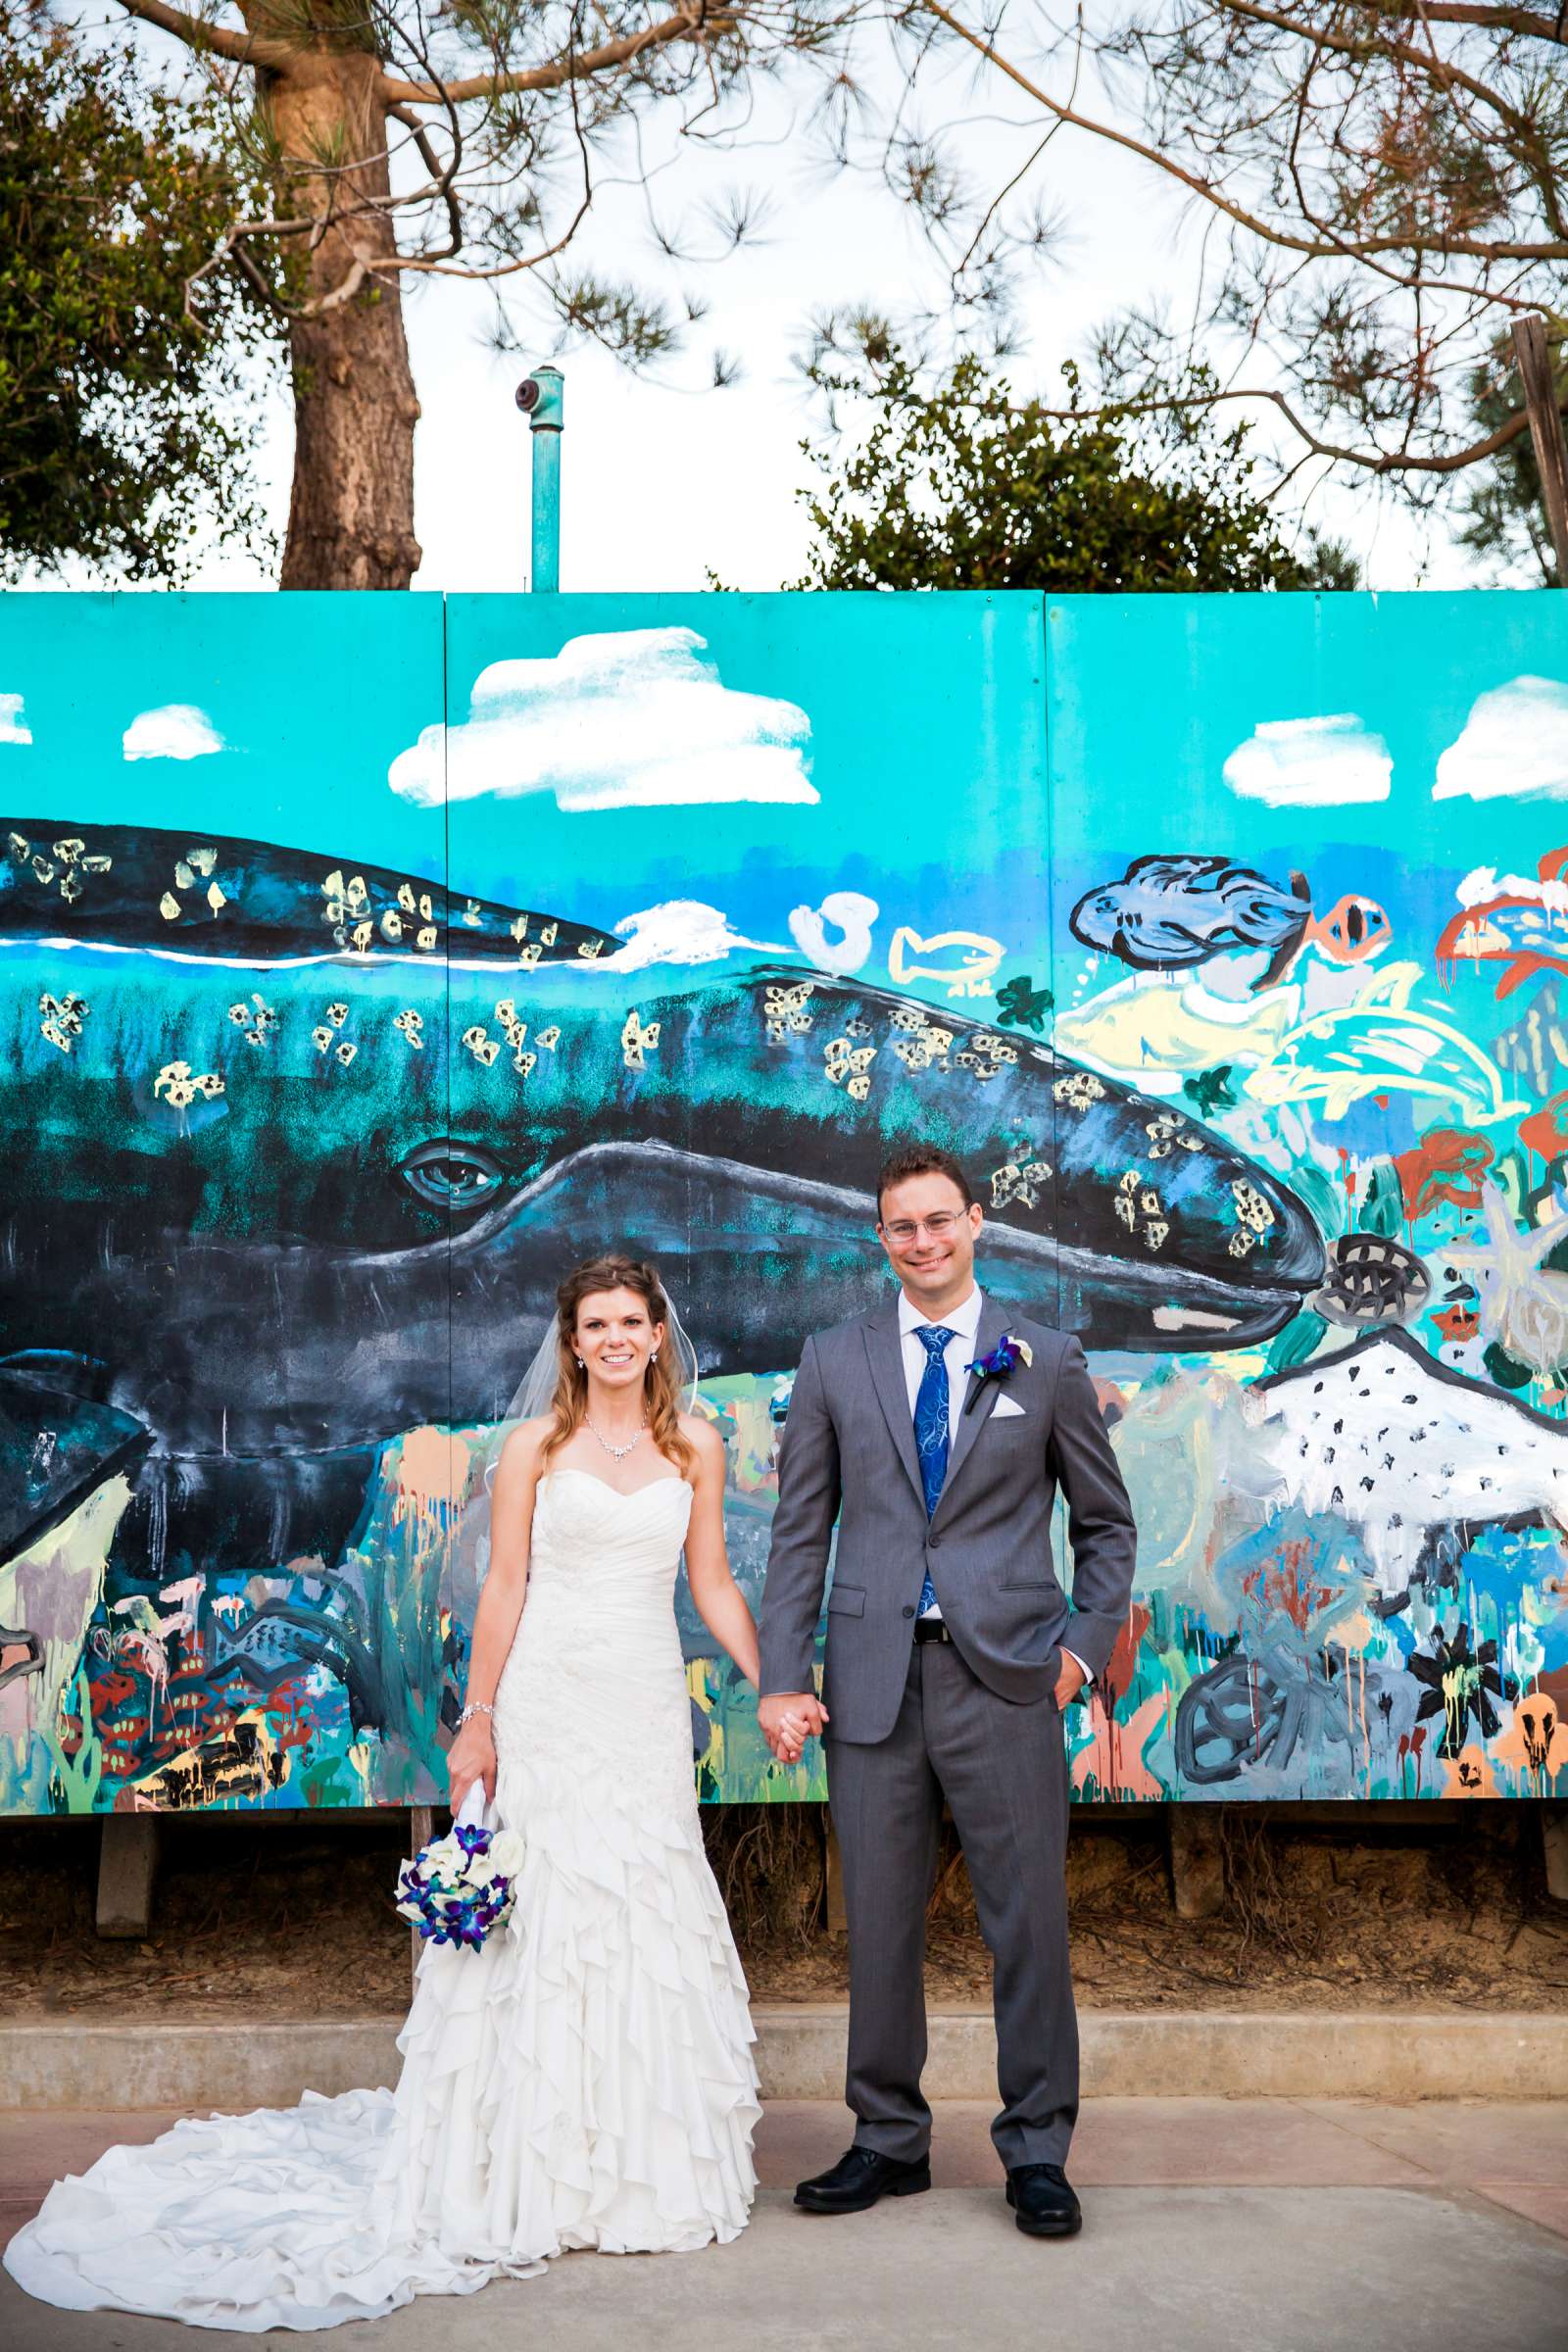 Birch Aquarium at Scripps Wedding, Cami and Zane Wedding Photo #49 by True Photography